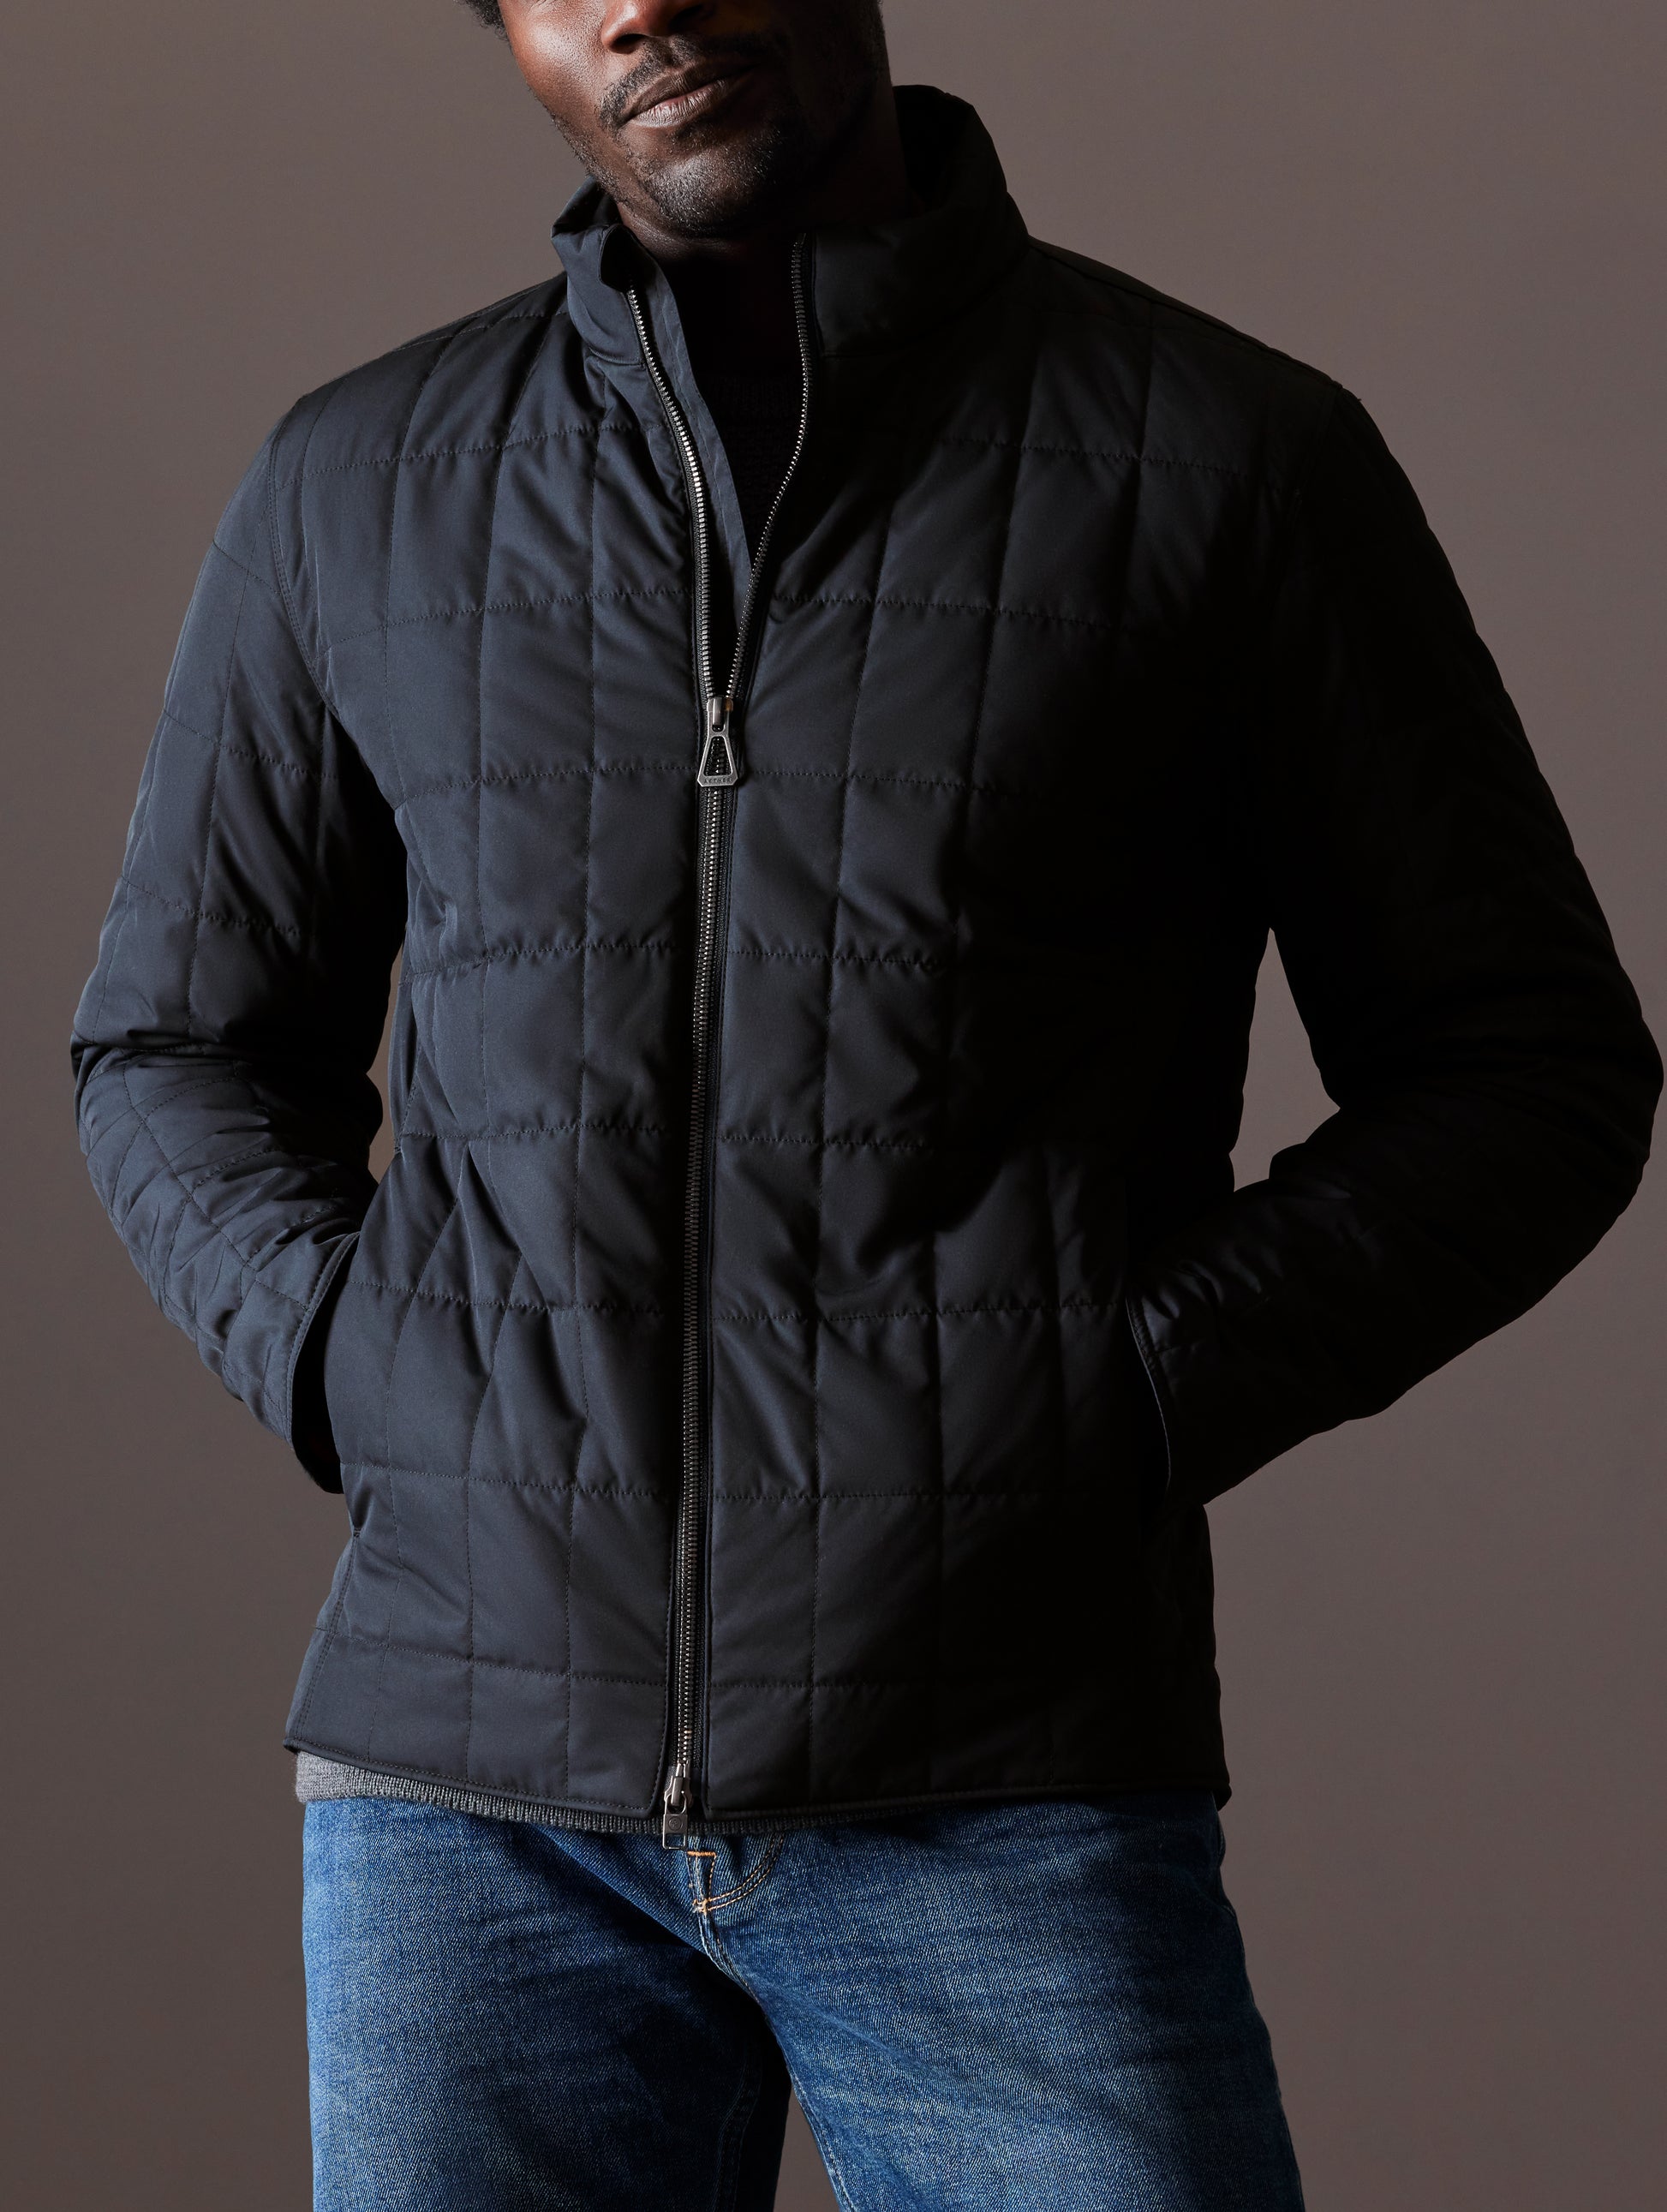 Man wearing black quilted jacket